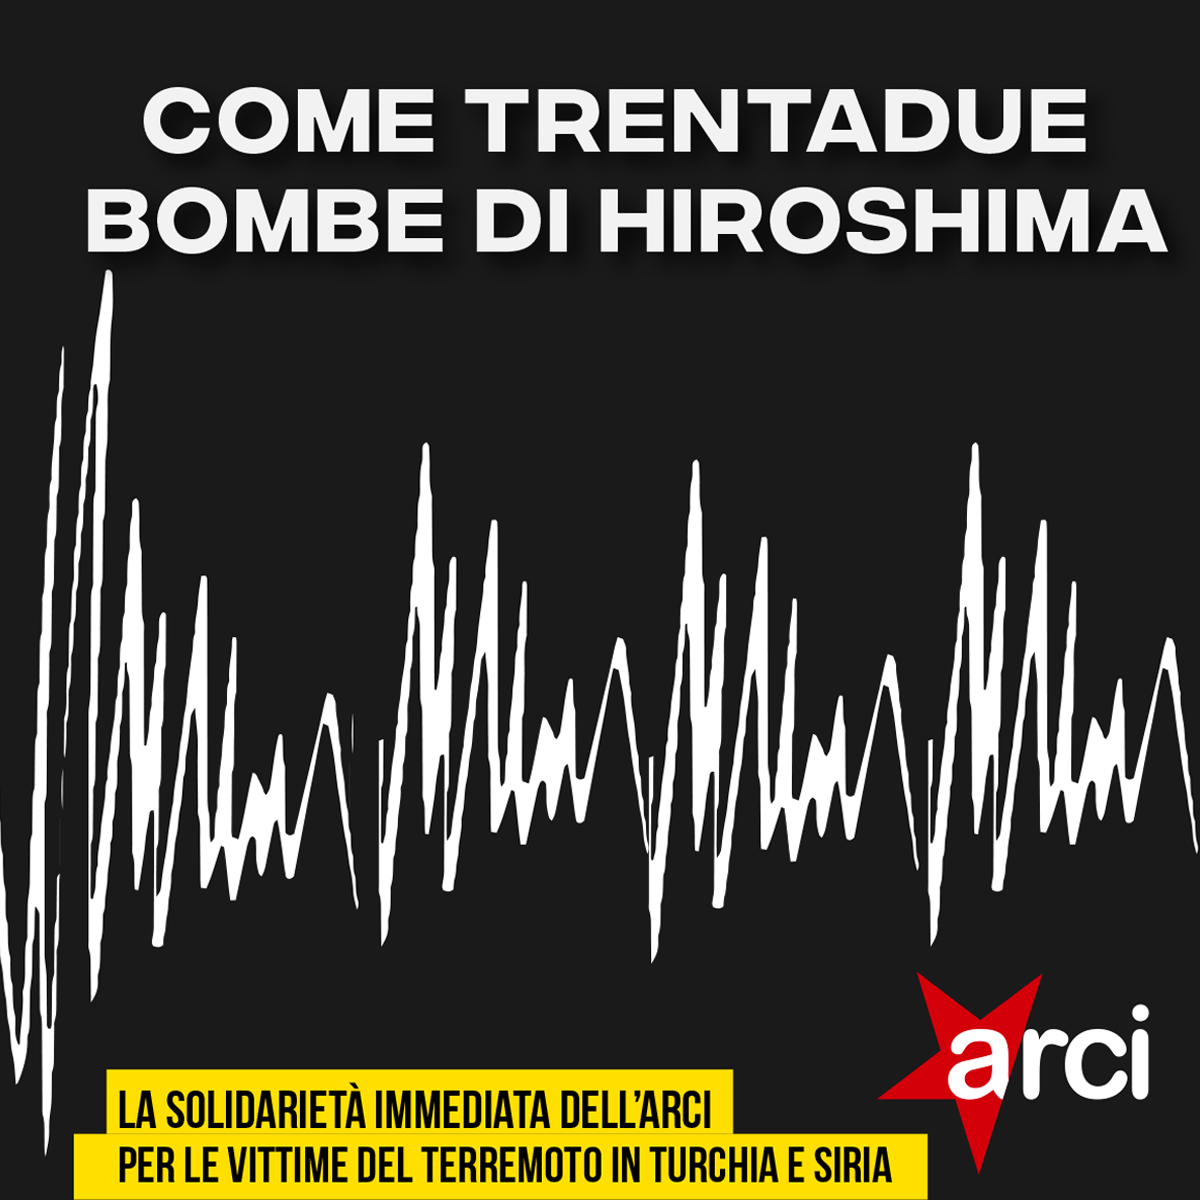 COME TRENTADUE BOMBE DI HIROSHIMA